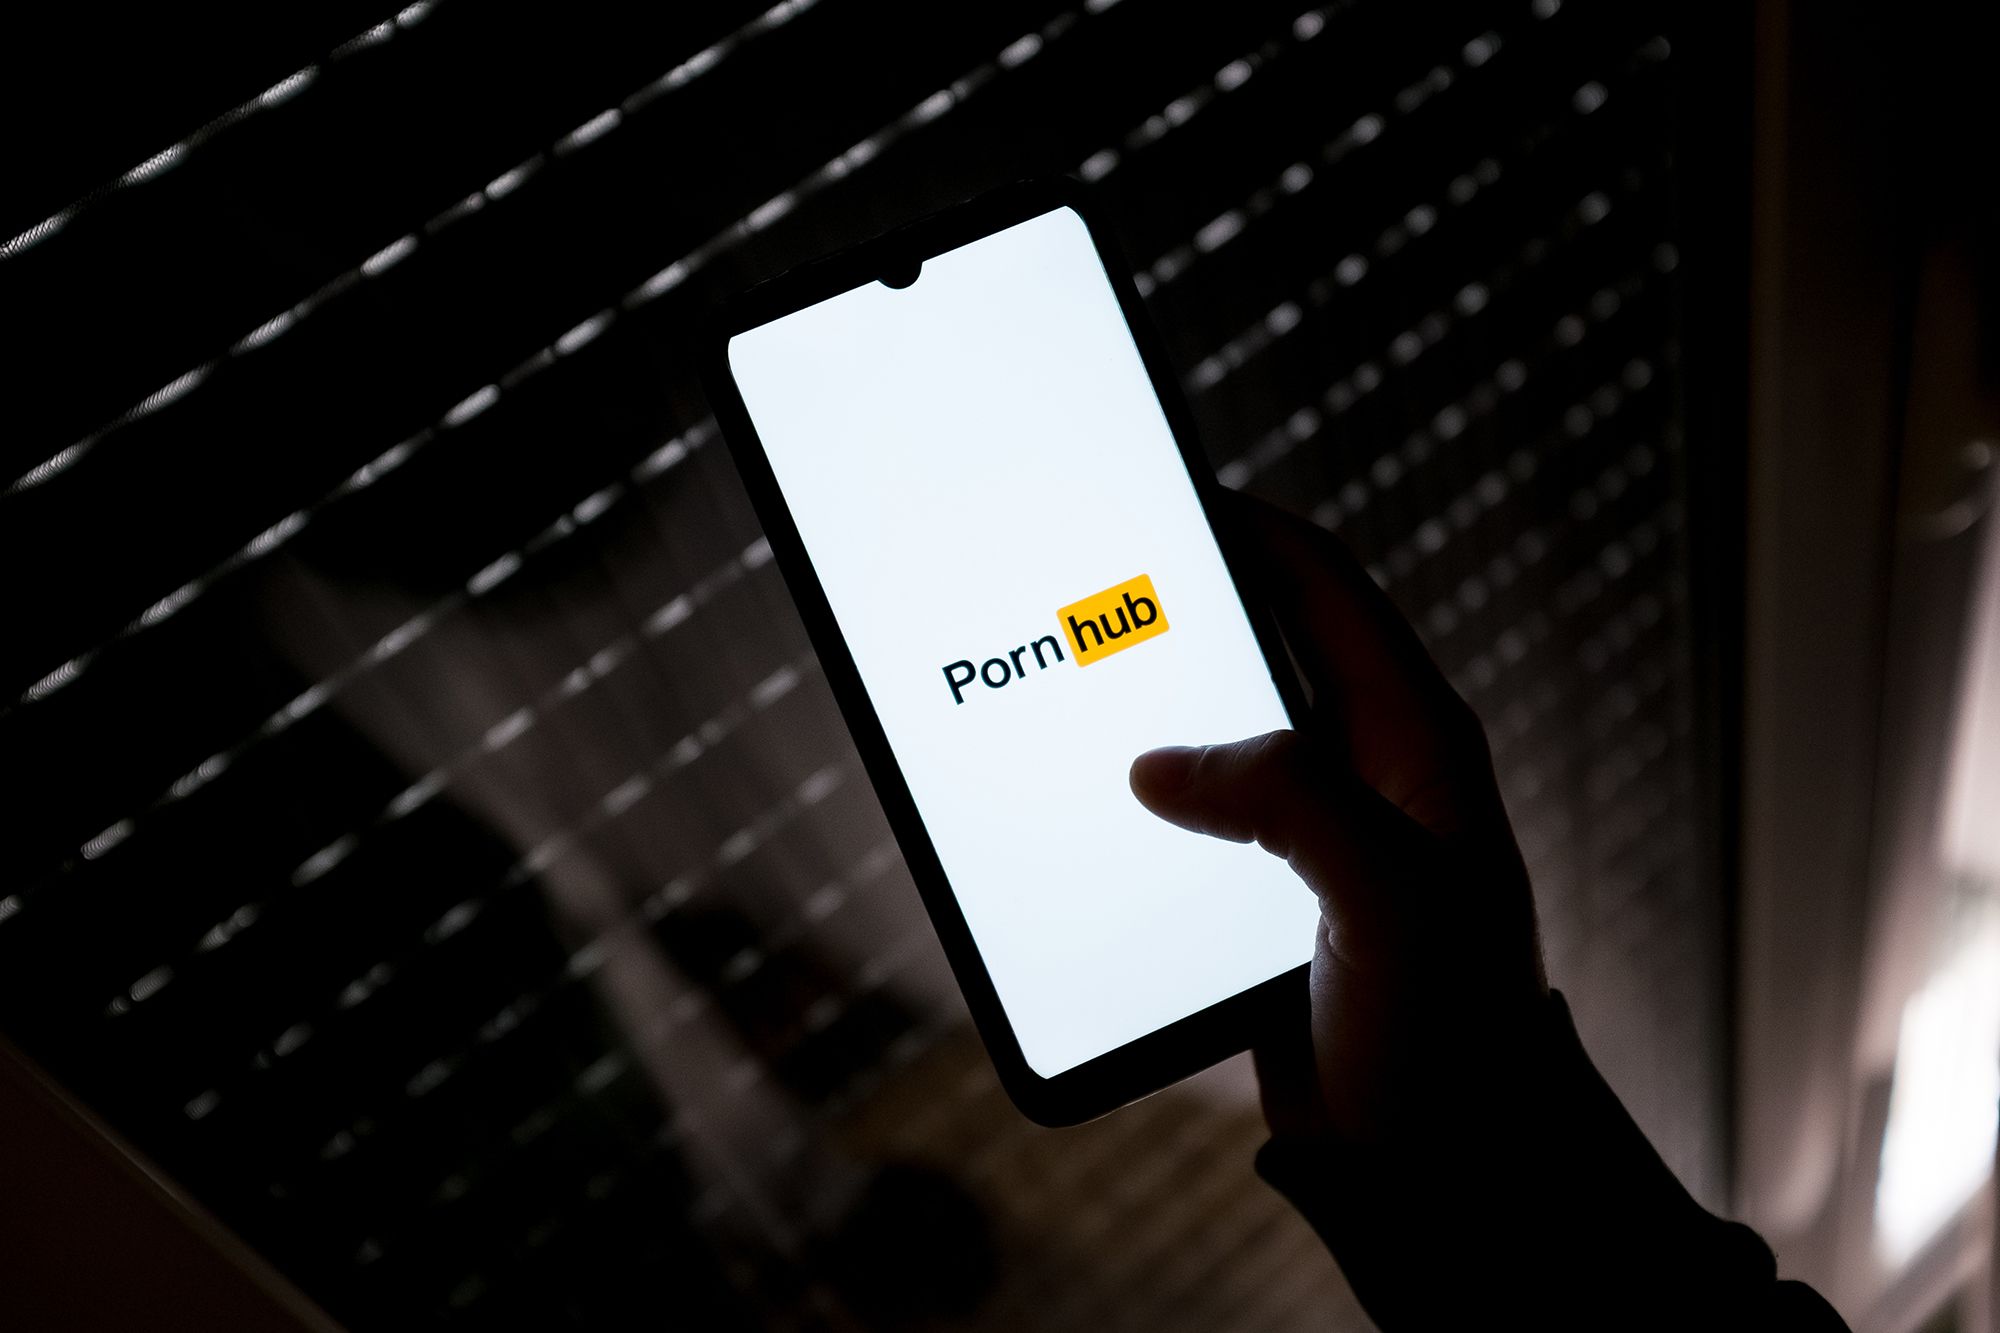 Ponuhb - Pornhub asks users, Big Tech for help as states adopt age verification laws  | CNN Business